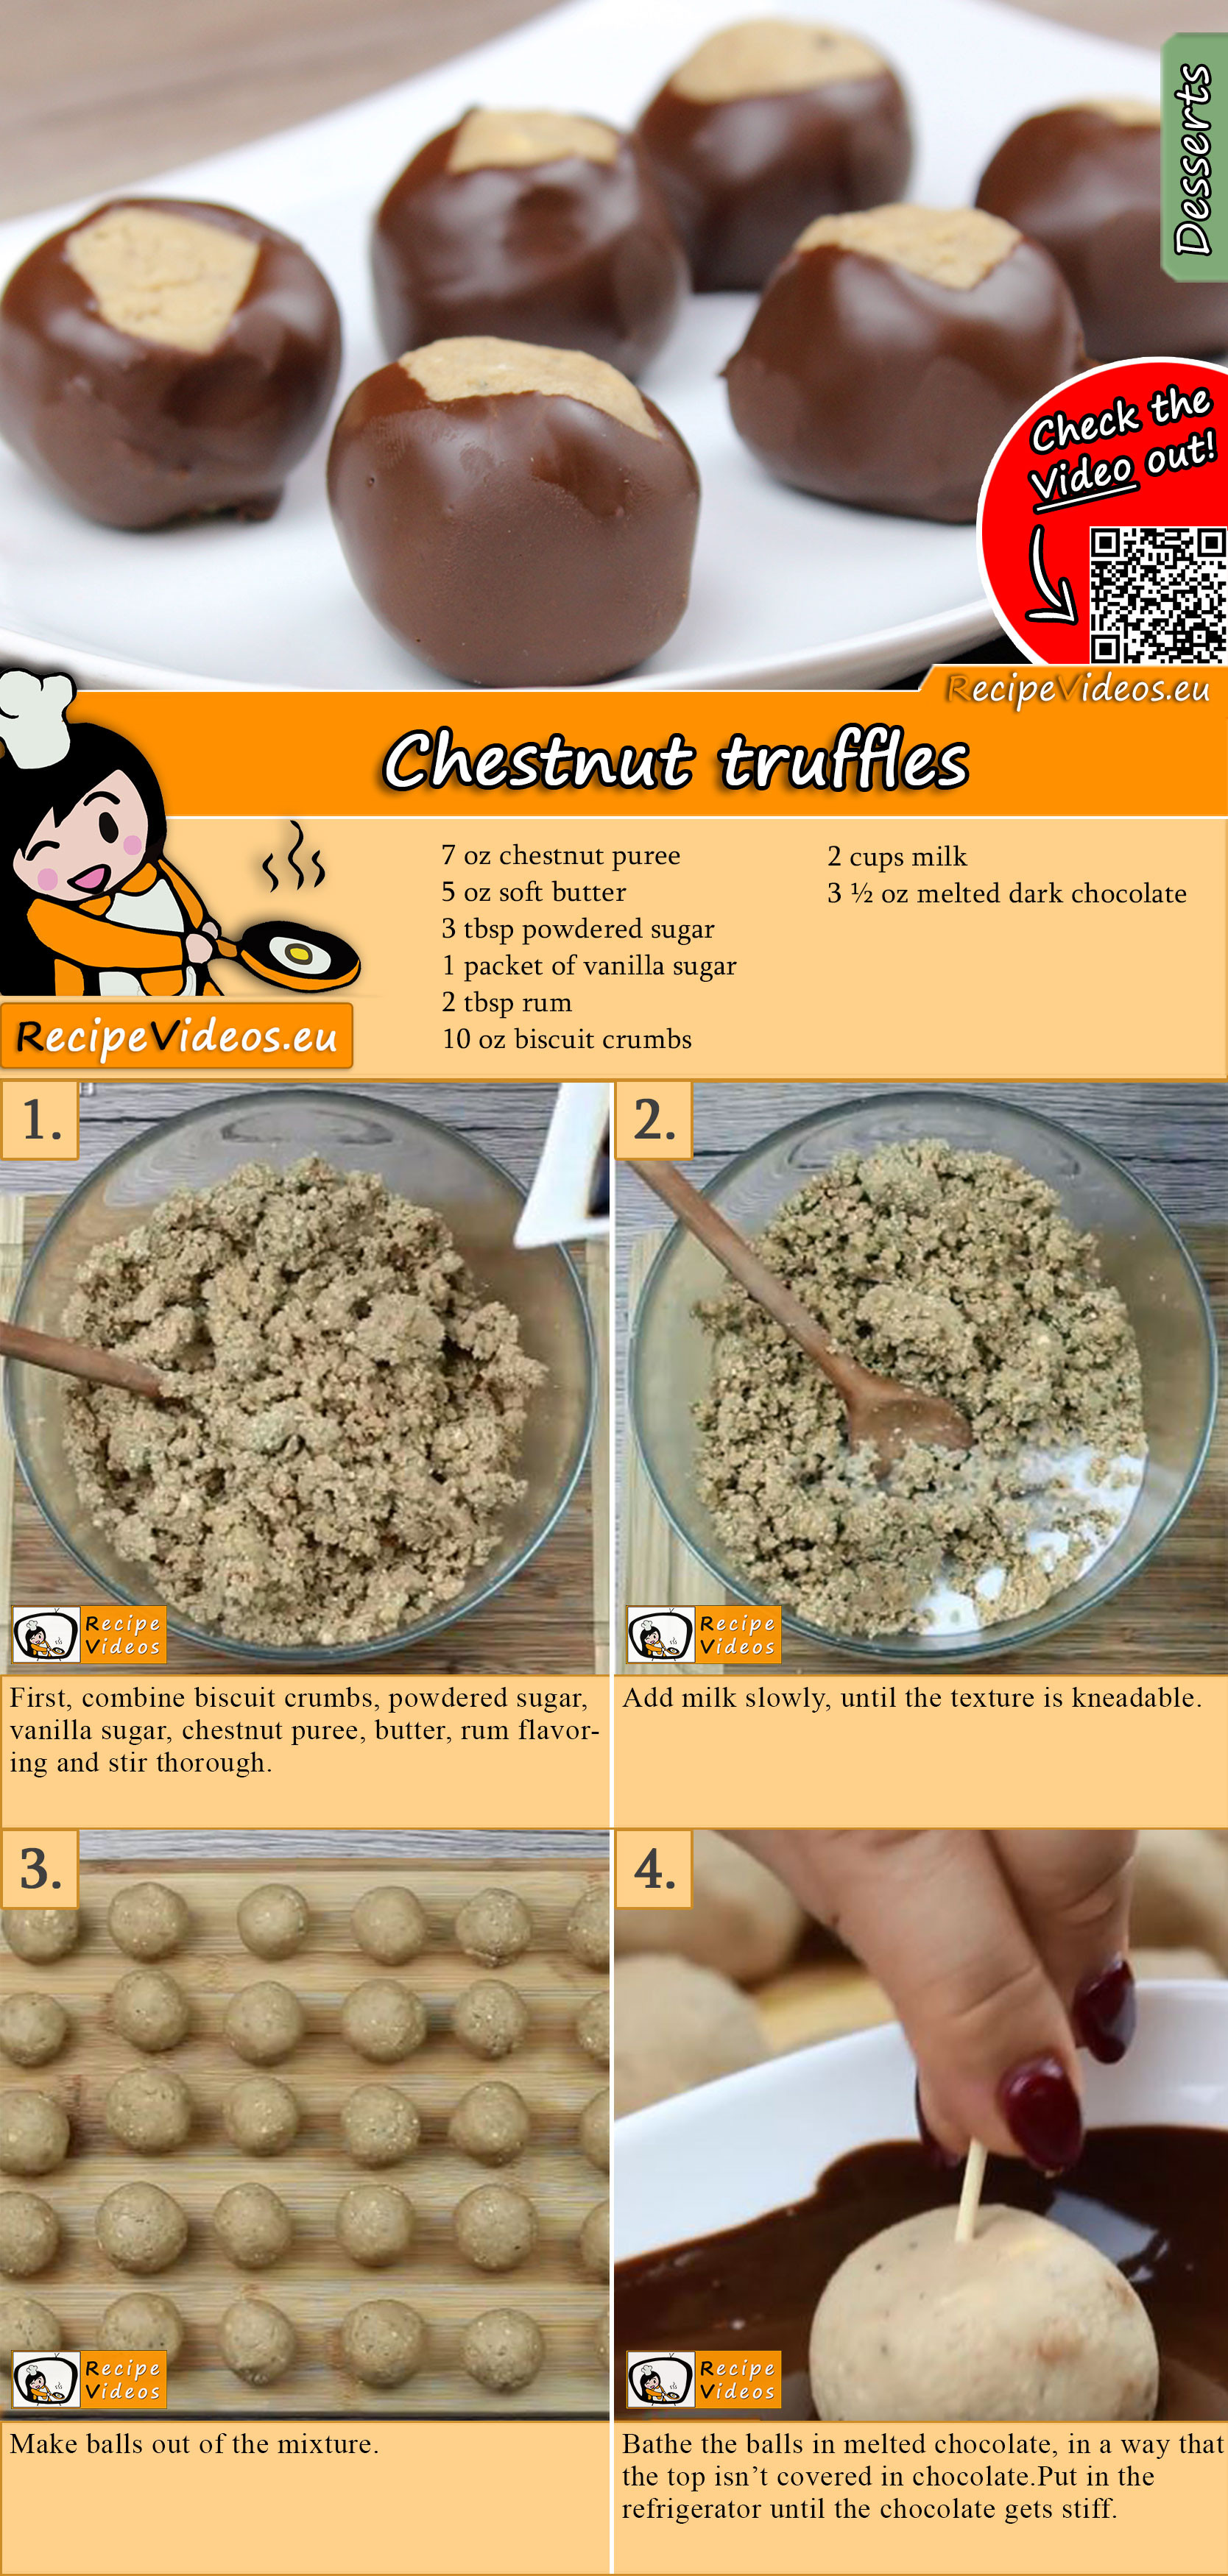 Chestnut truffles recipe with video